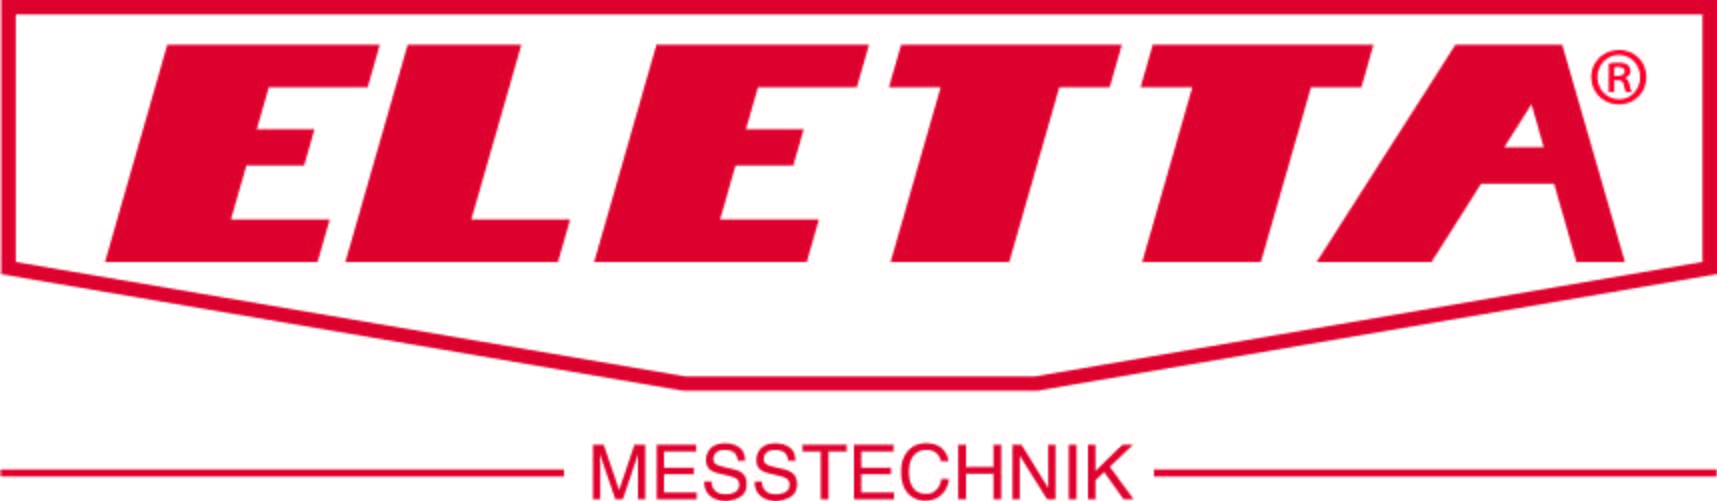 Eletta Meßtechnik GmbH